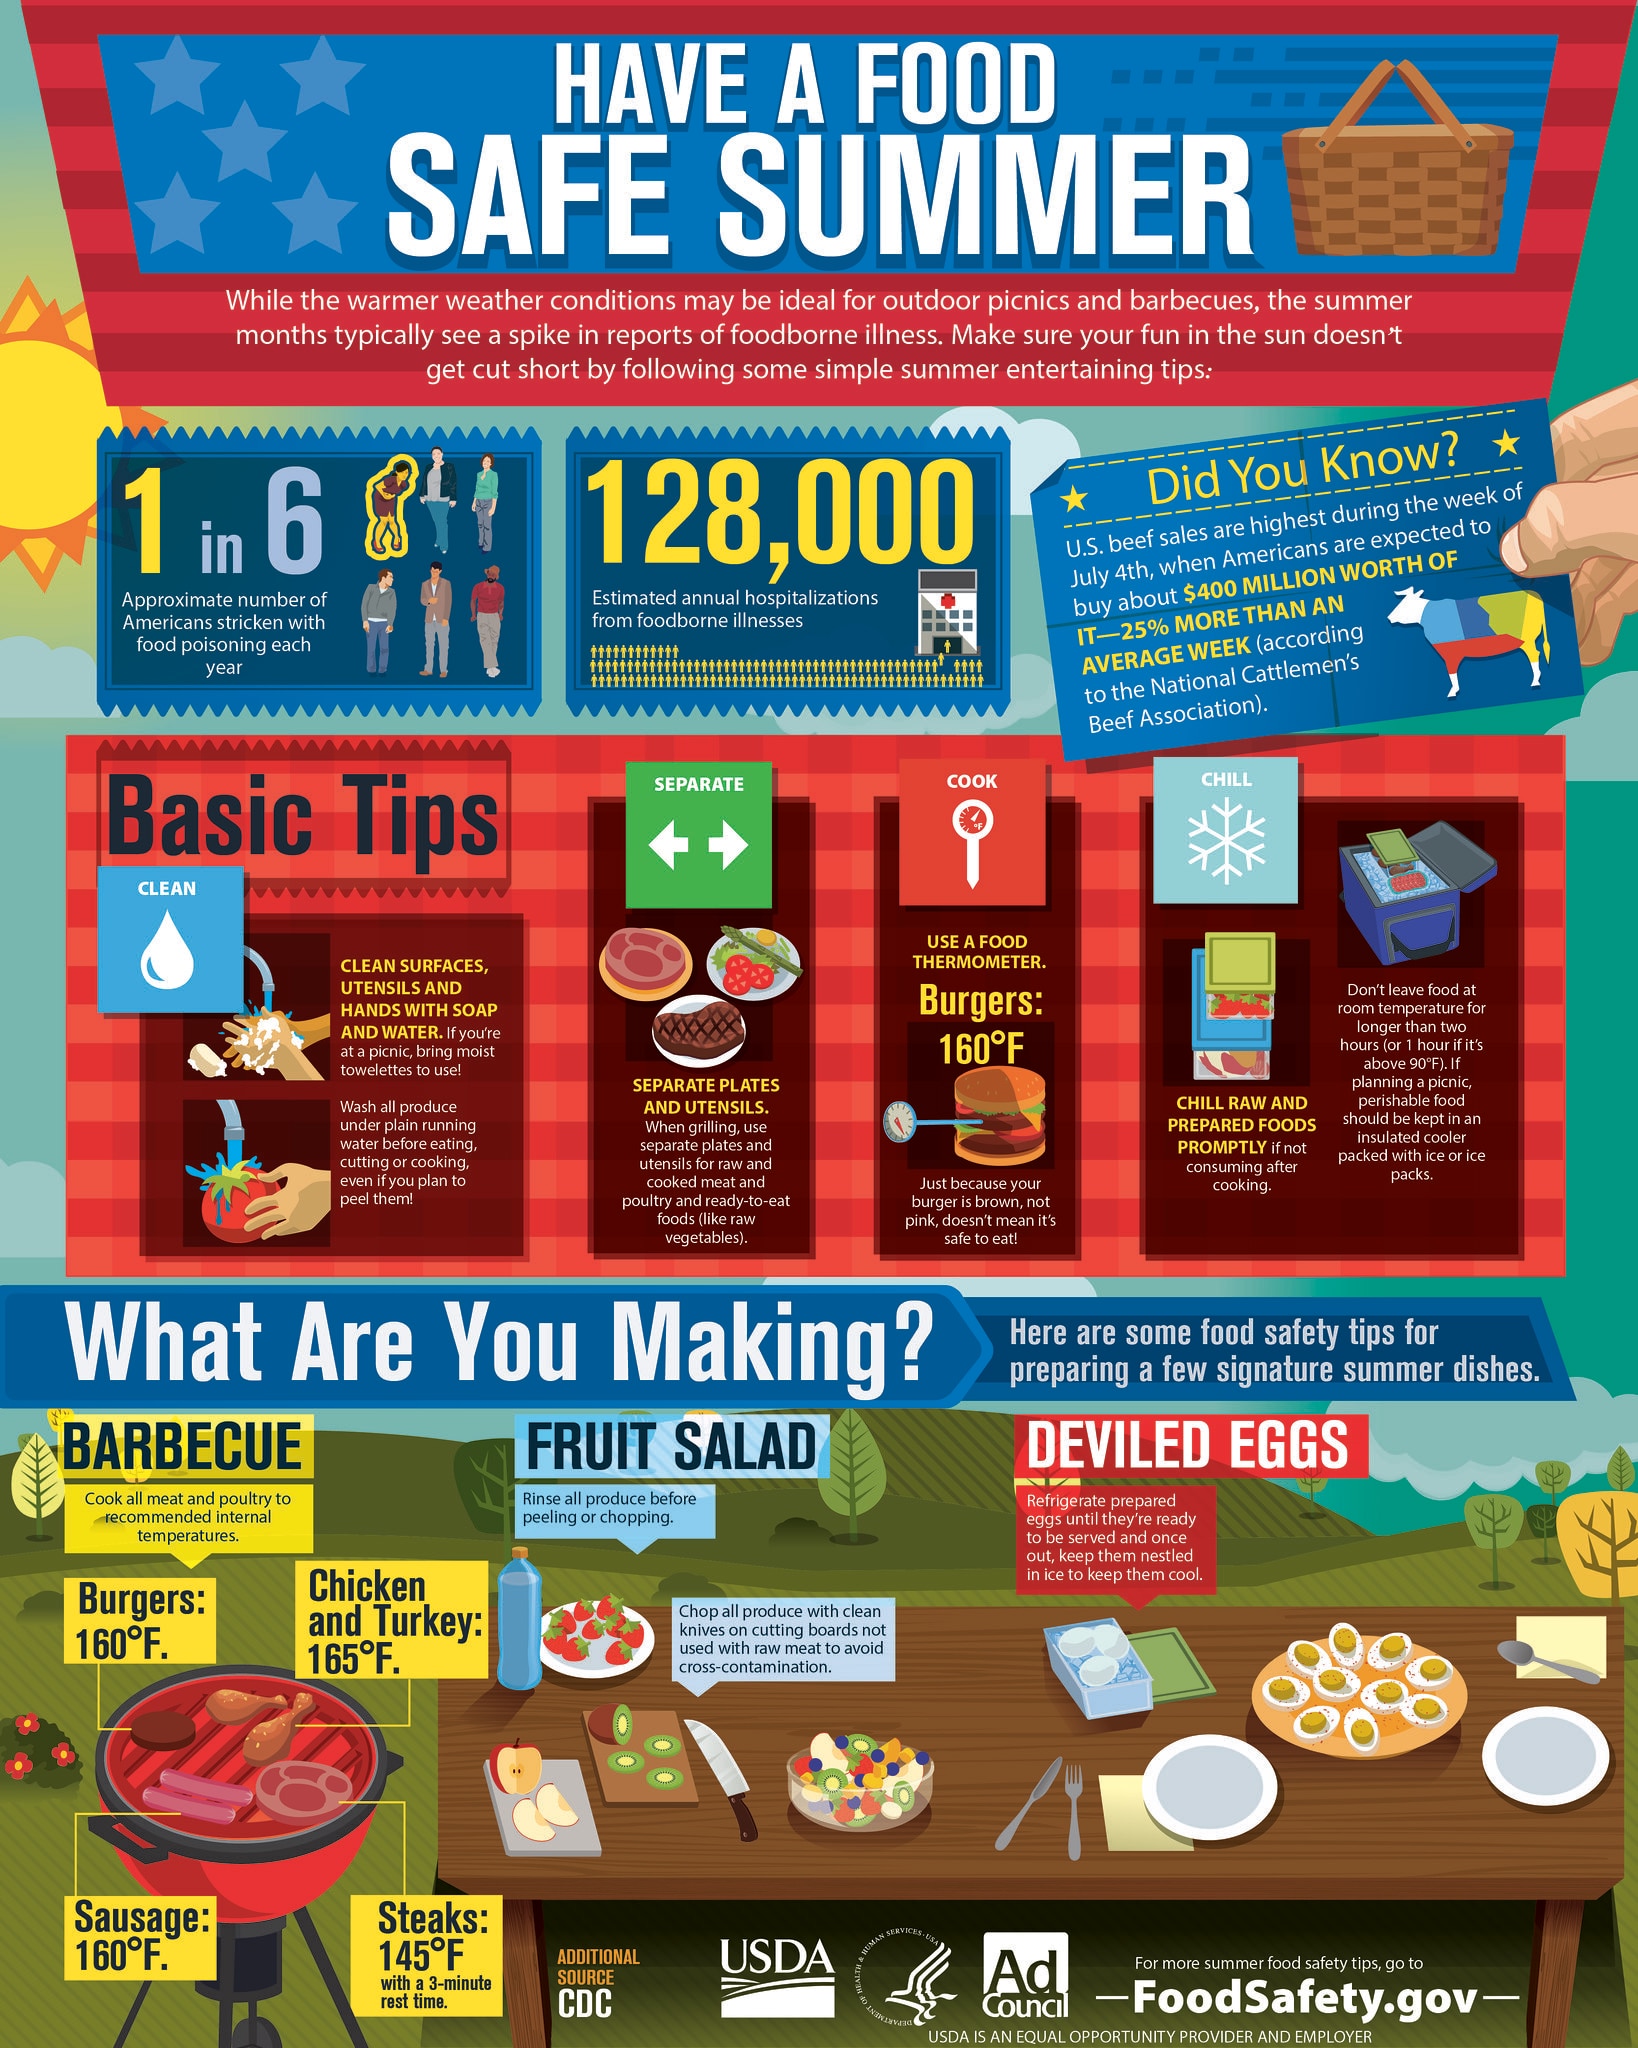 https://www.foodsafety.gov/sites/default/files/2019-05/summer-food-safety-infographic.jpg